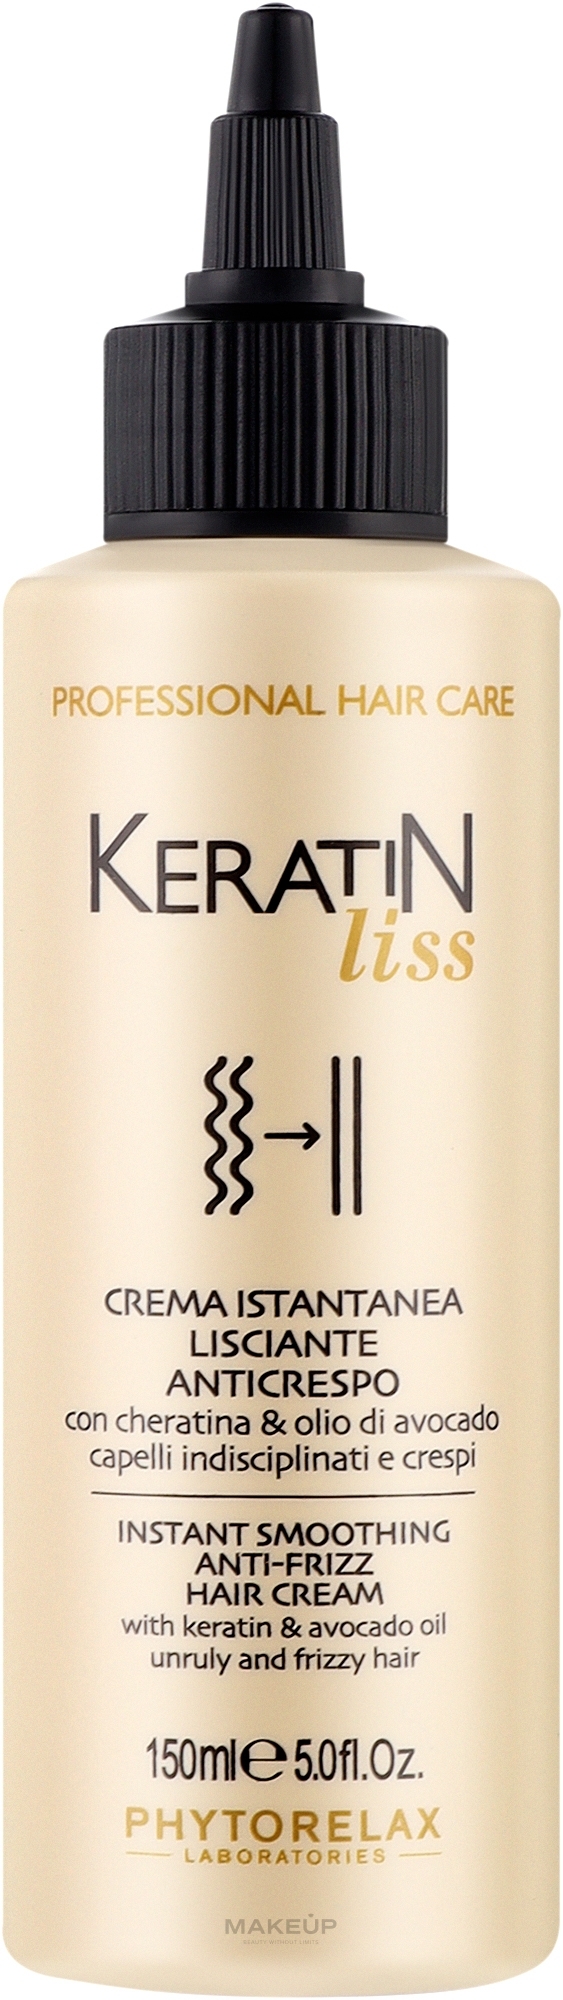 Крем для разглаживания волос - Phytorelax Laboratories Keratin Liss Instant Smoothing Anti-Frizz Hair Cream — фото 150ml